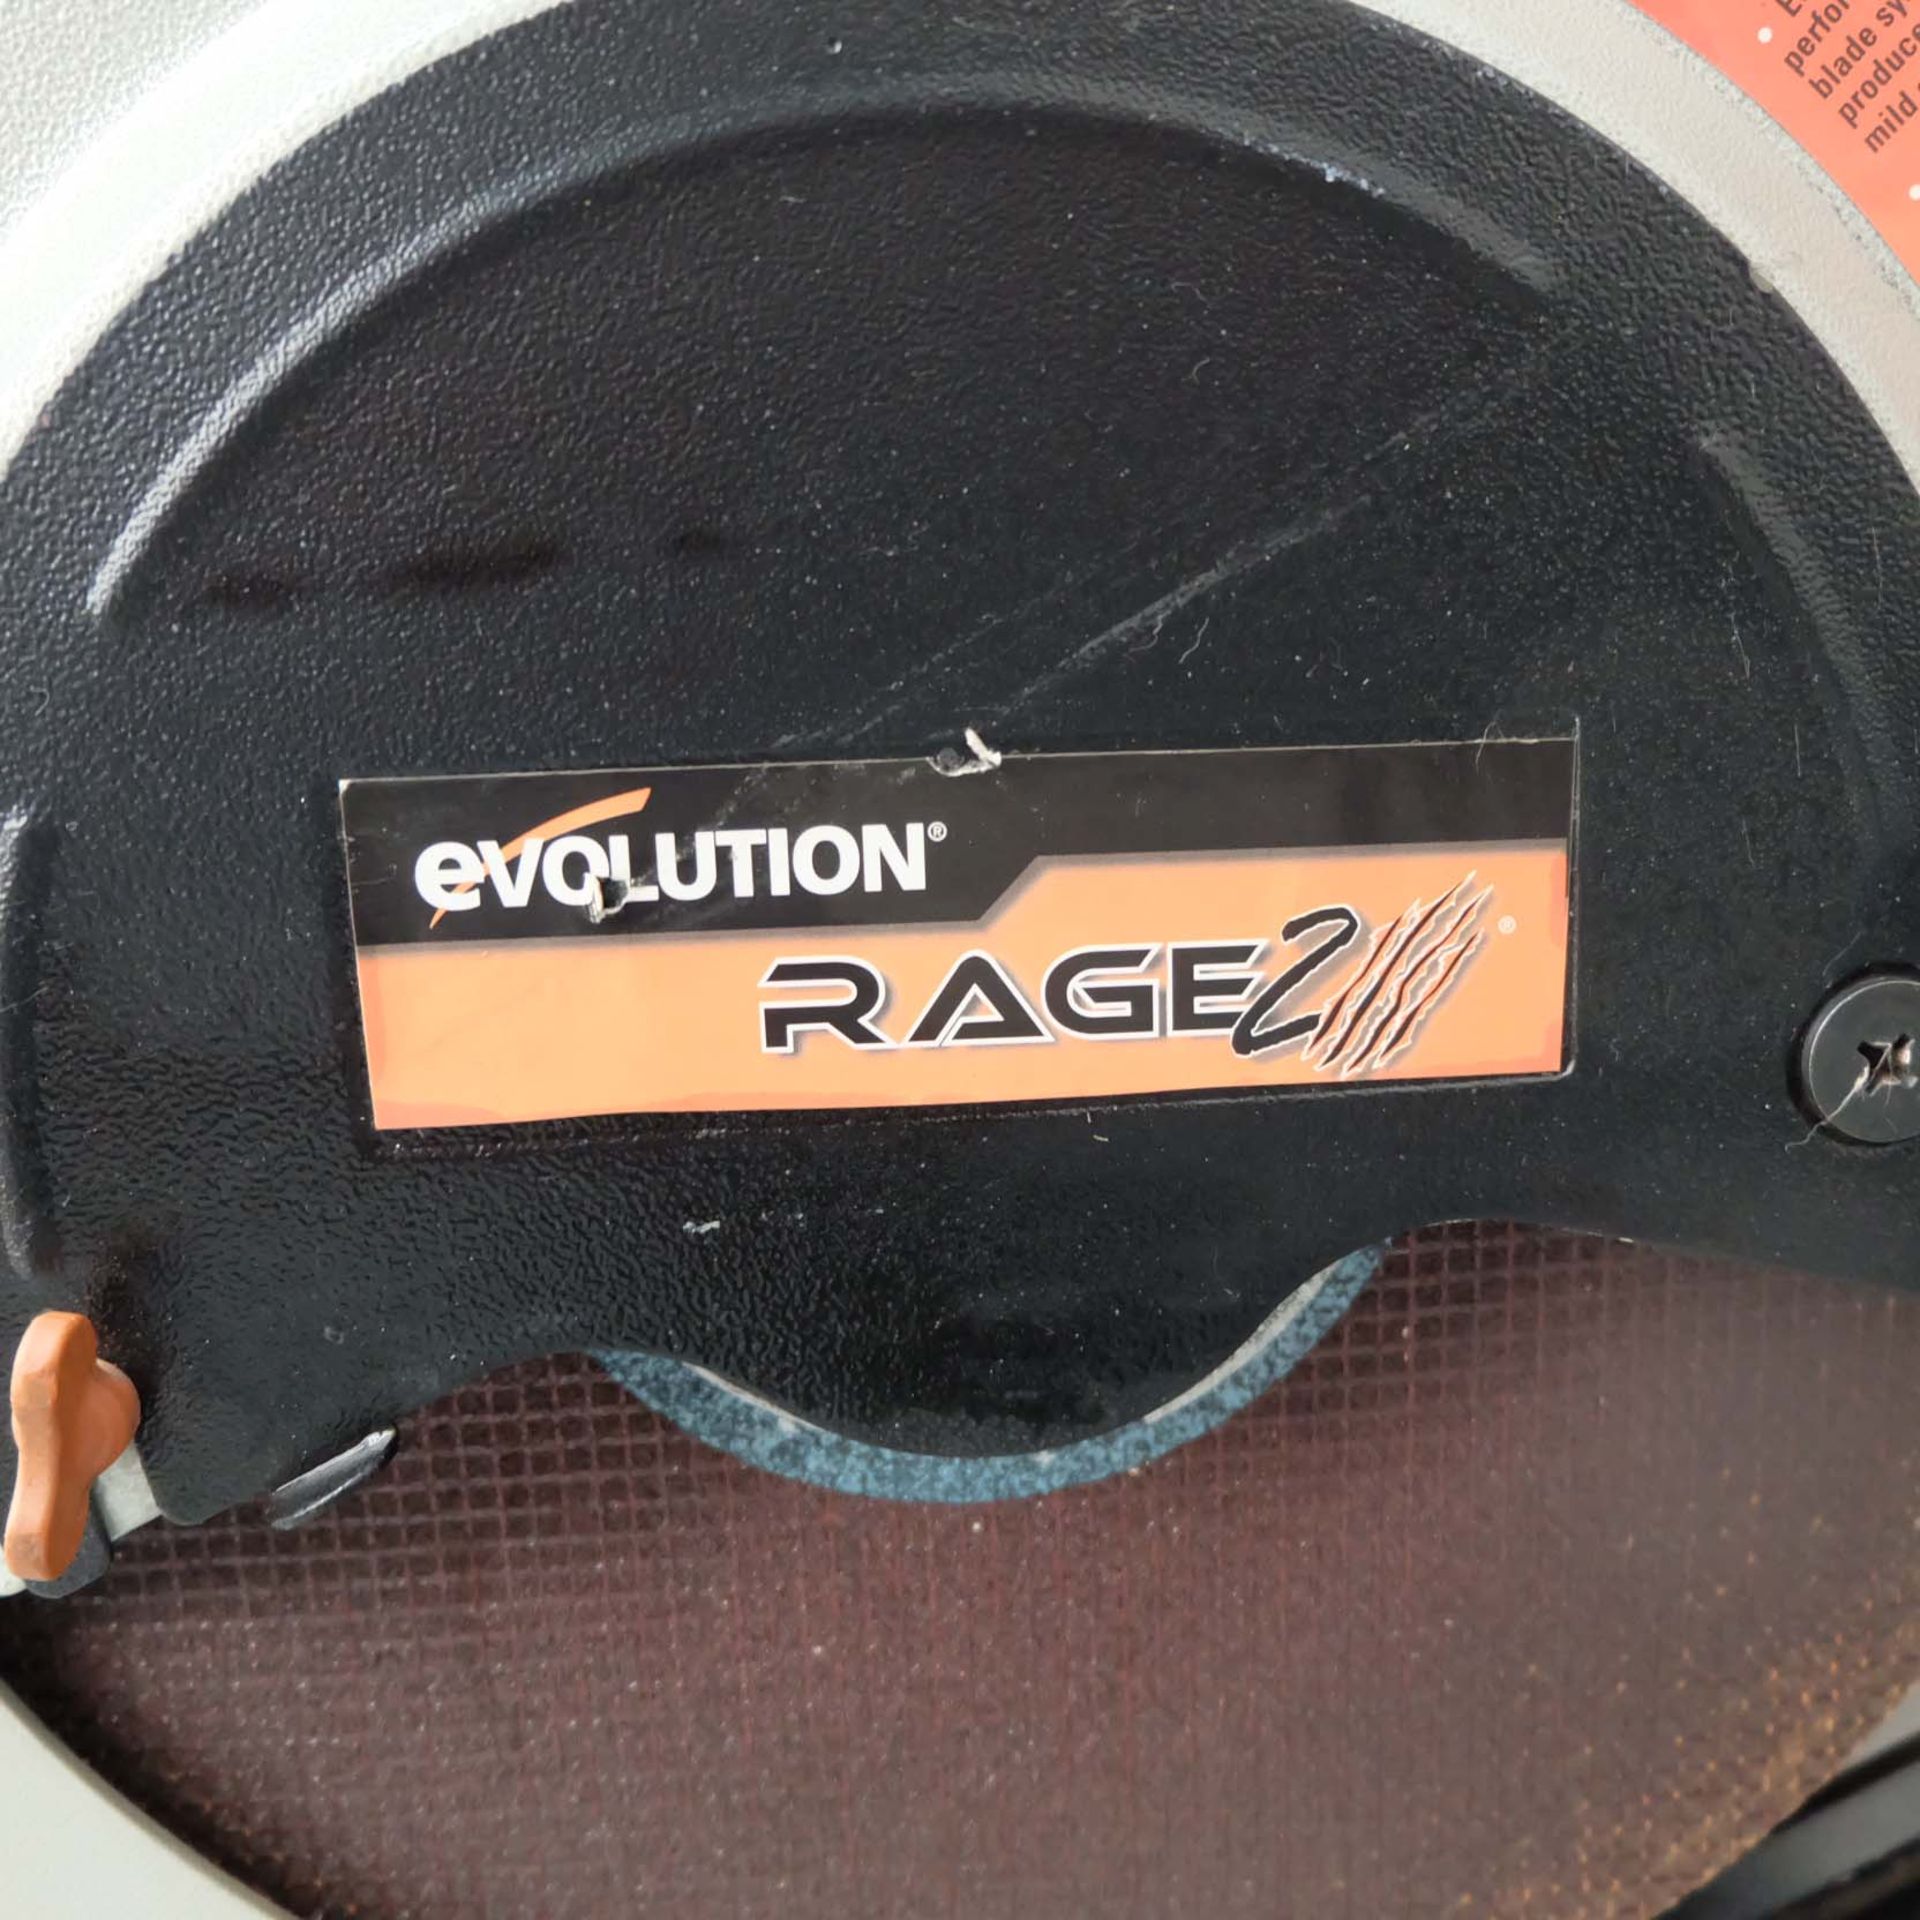 Evolution Rage 2 TCT Blade Multipurpose Saw. Blade Size 355mm/14". Single Phase Motor, 230V, 2000 W - Image 5 of 7